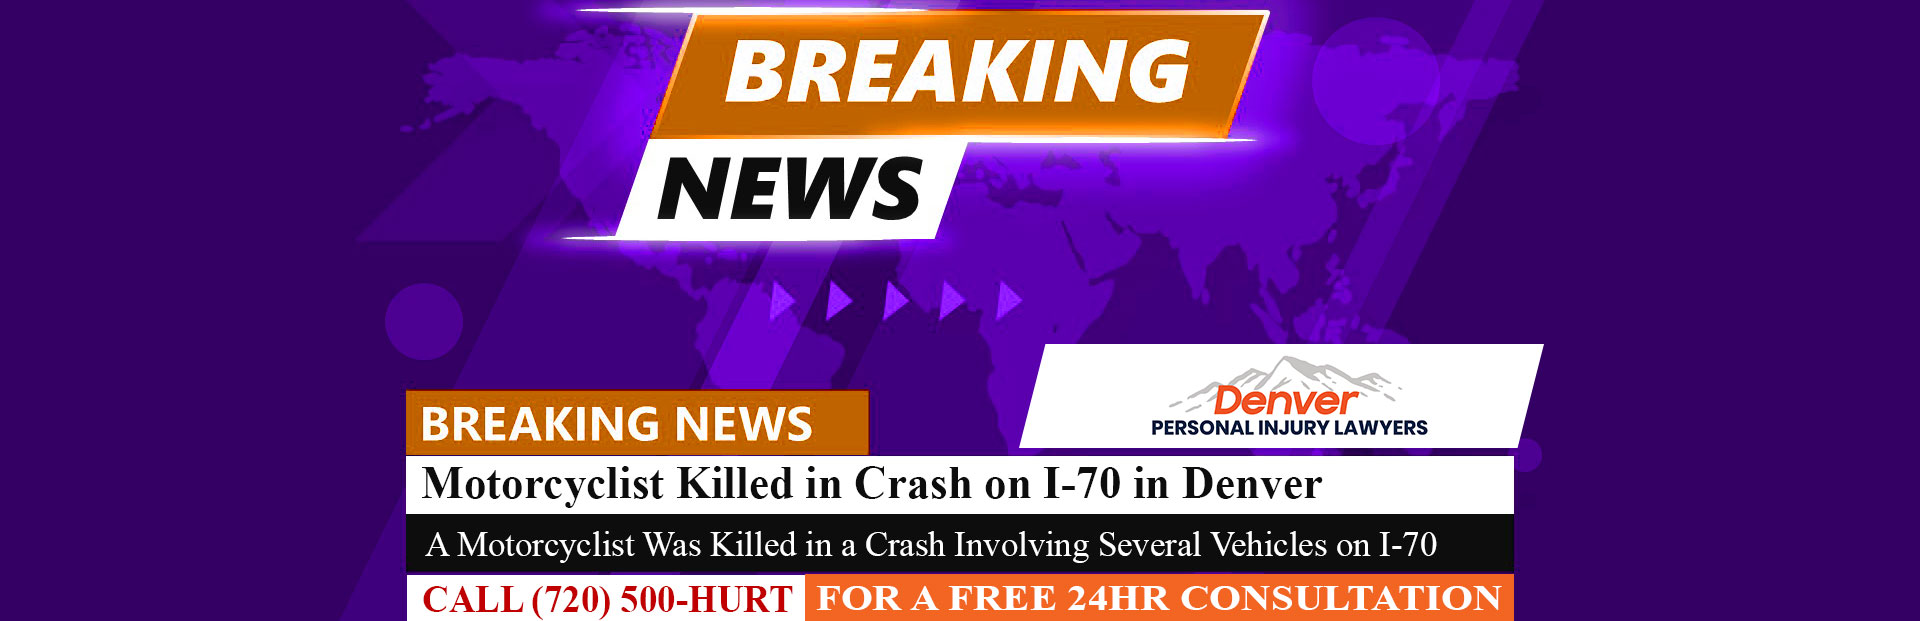 [03-06-23] Motorcyclist Killed in Crash Involving Several Vehicles on I-70 in Denver